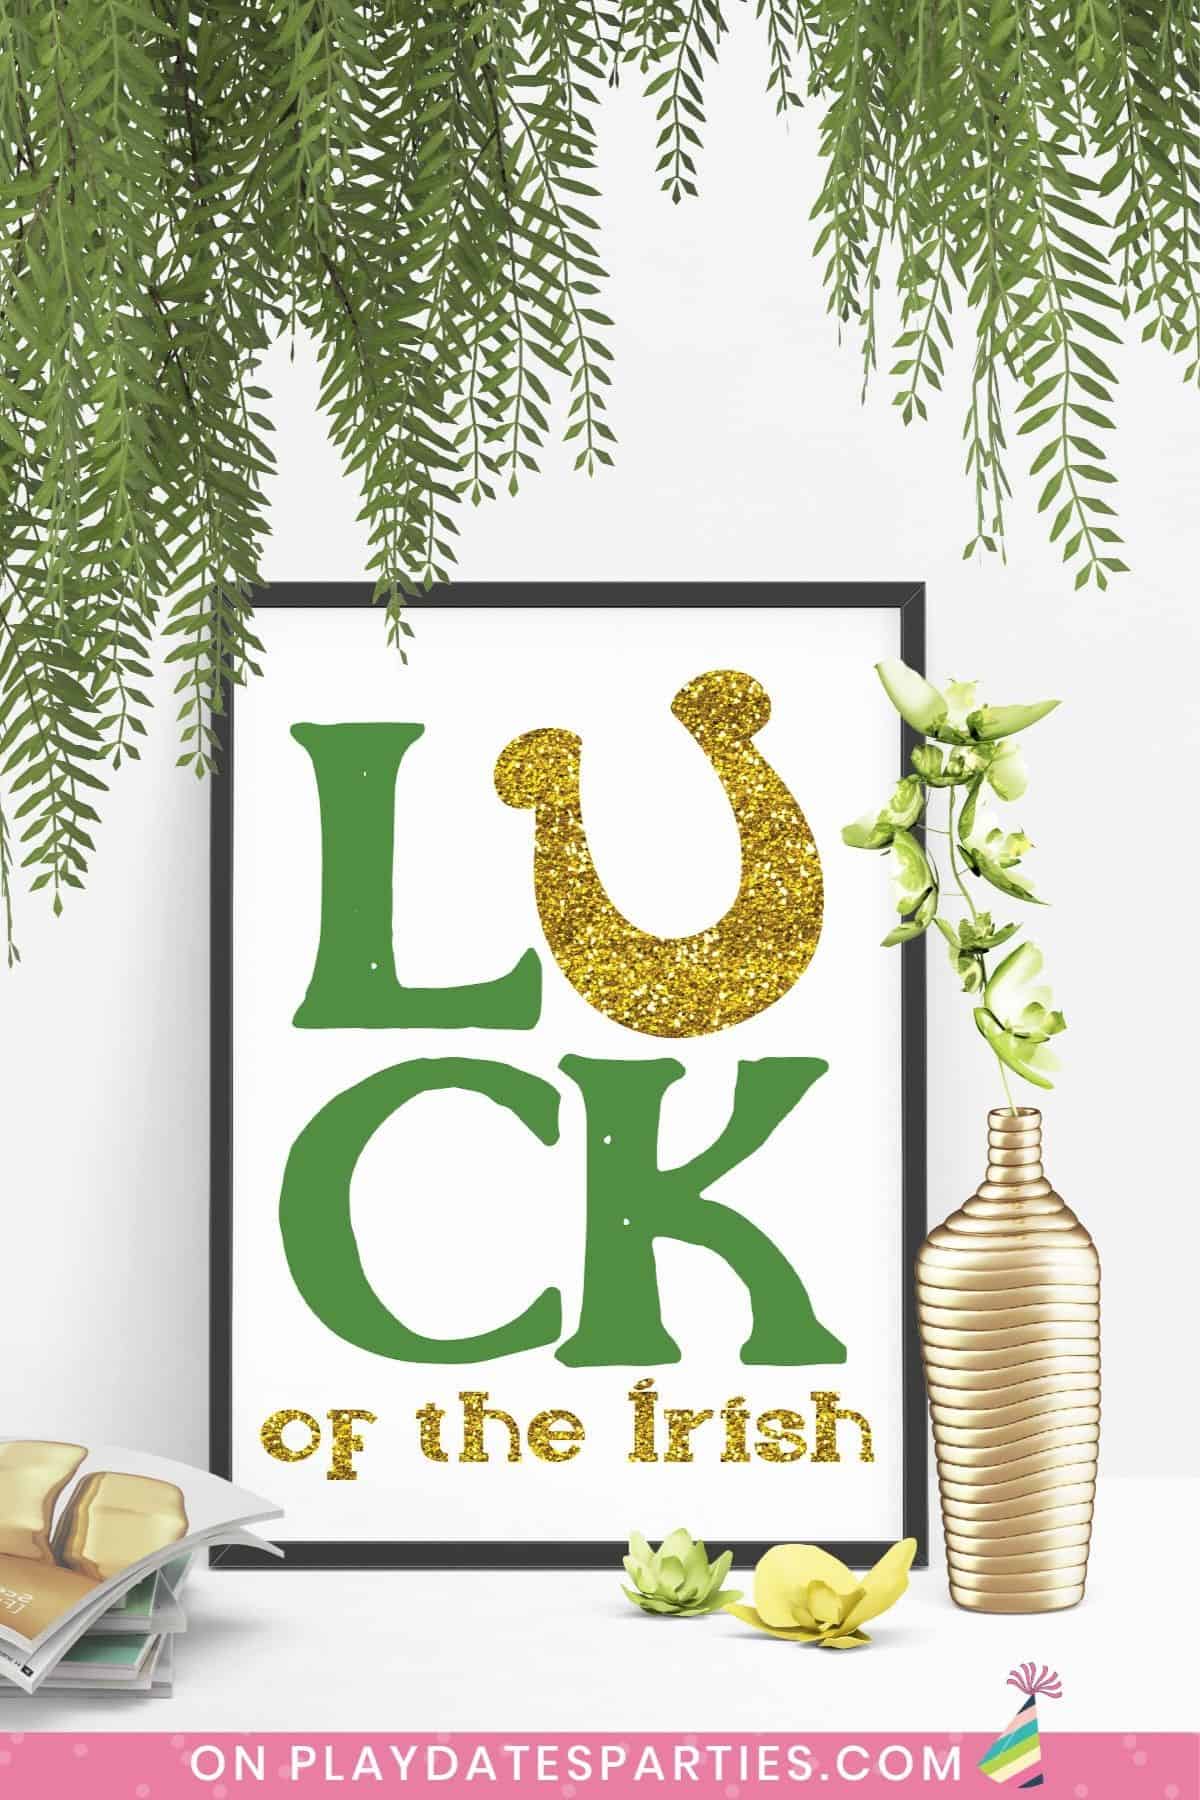 Free art print of Happy St. Patricks day poster